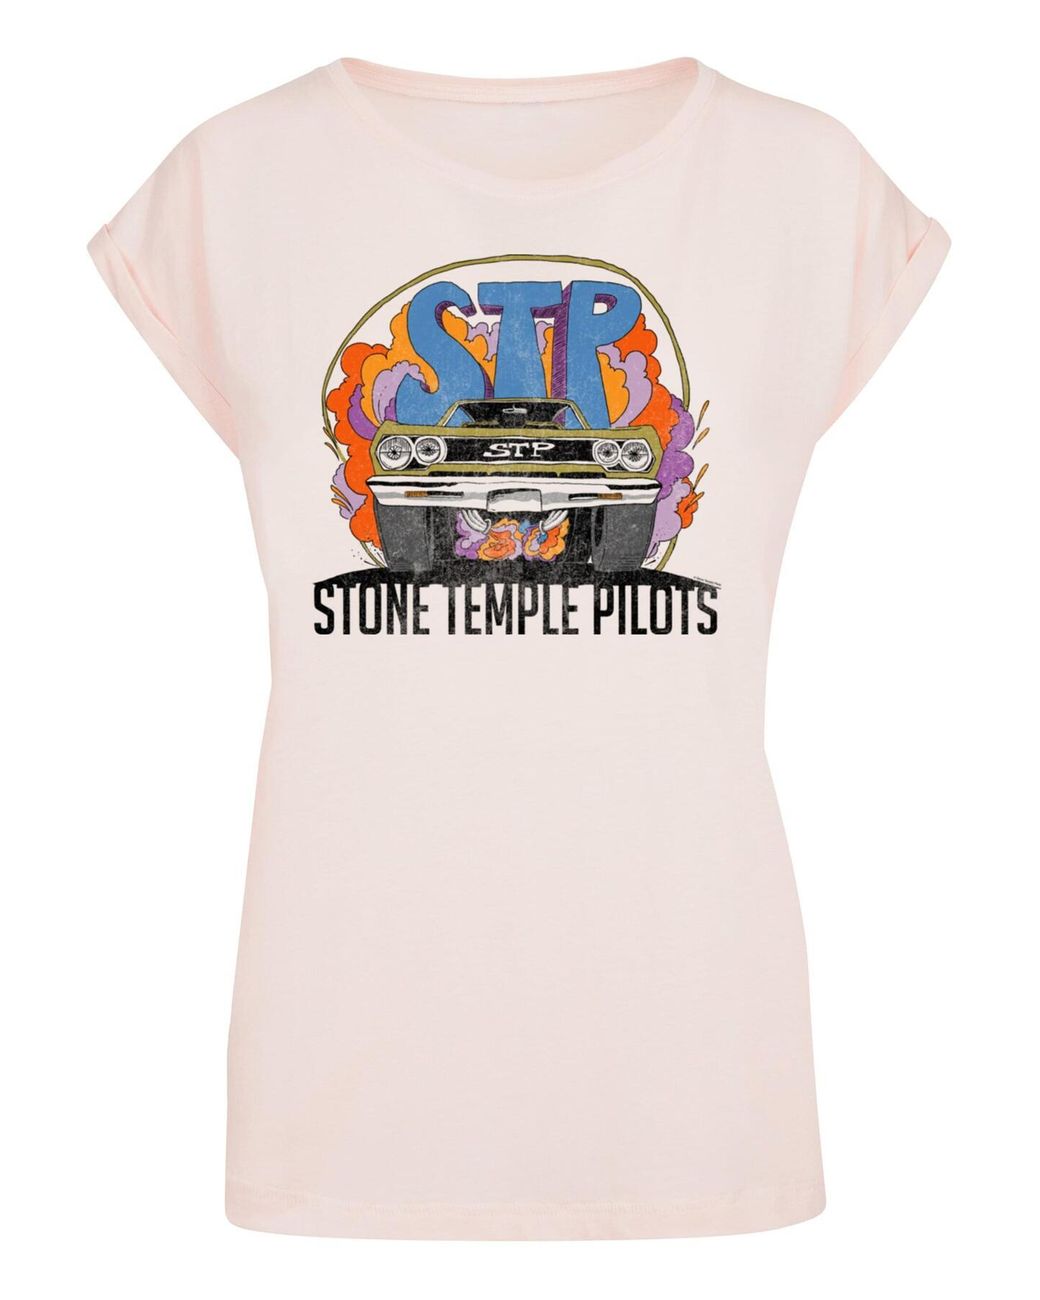 Lyst | in vintage-muskel-t-shirt Stone Merchcode temple – pilots DE Pink